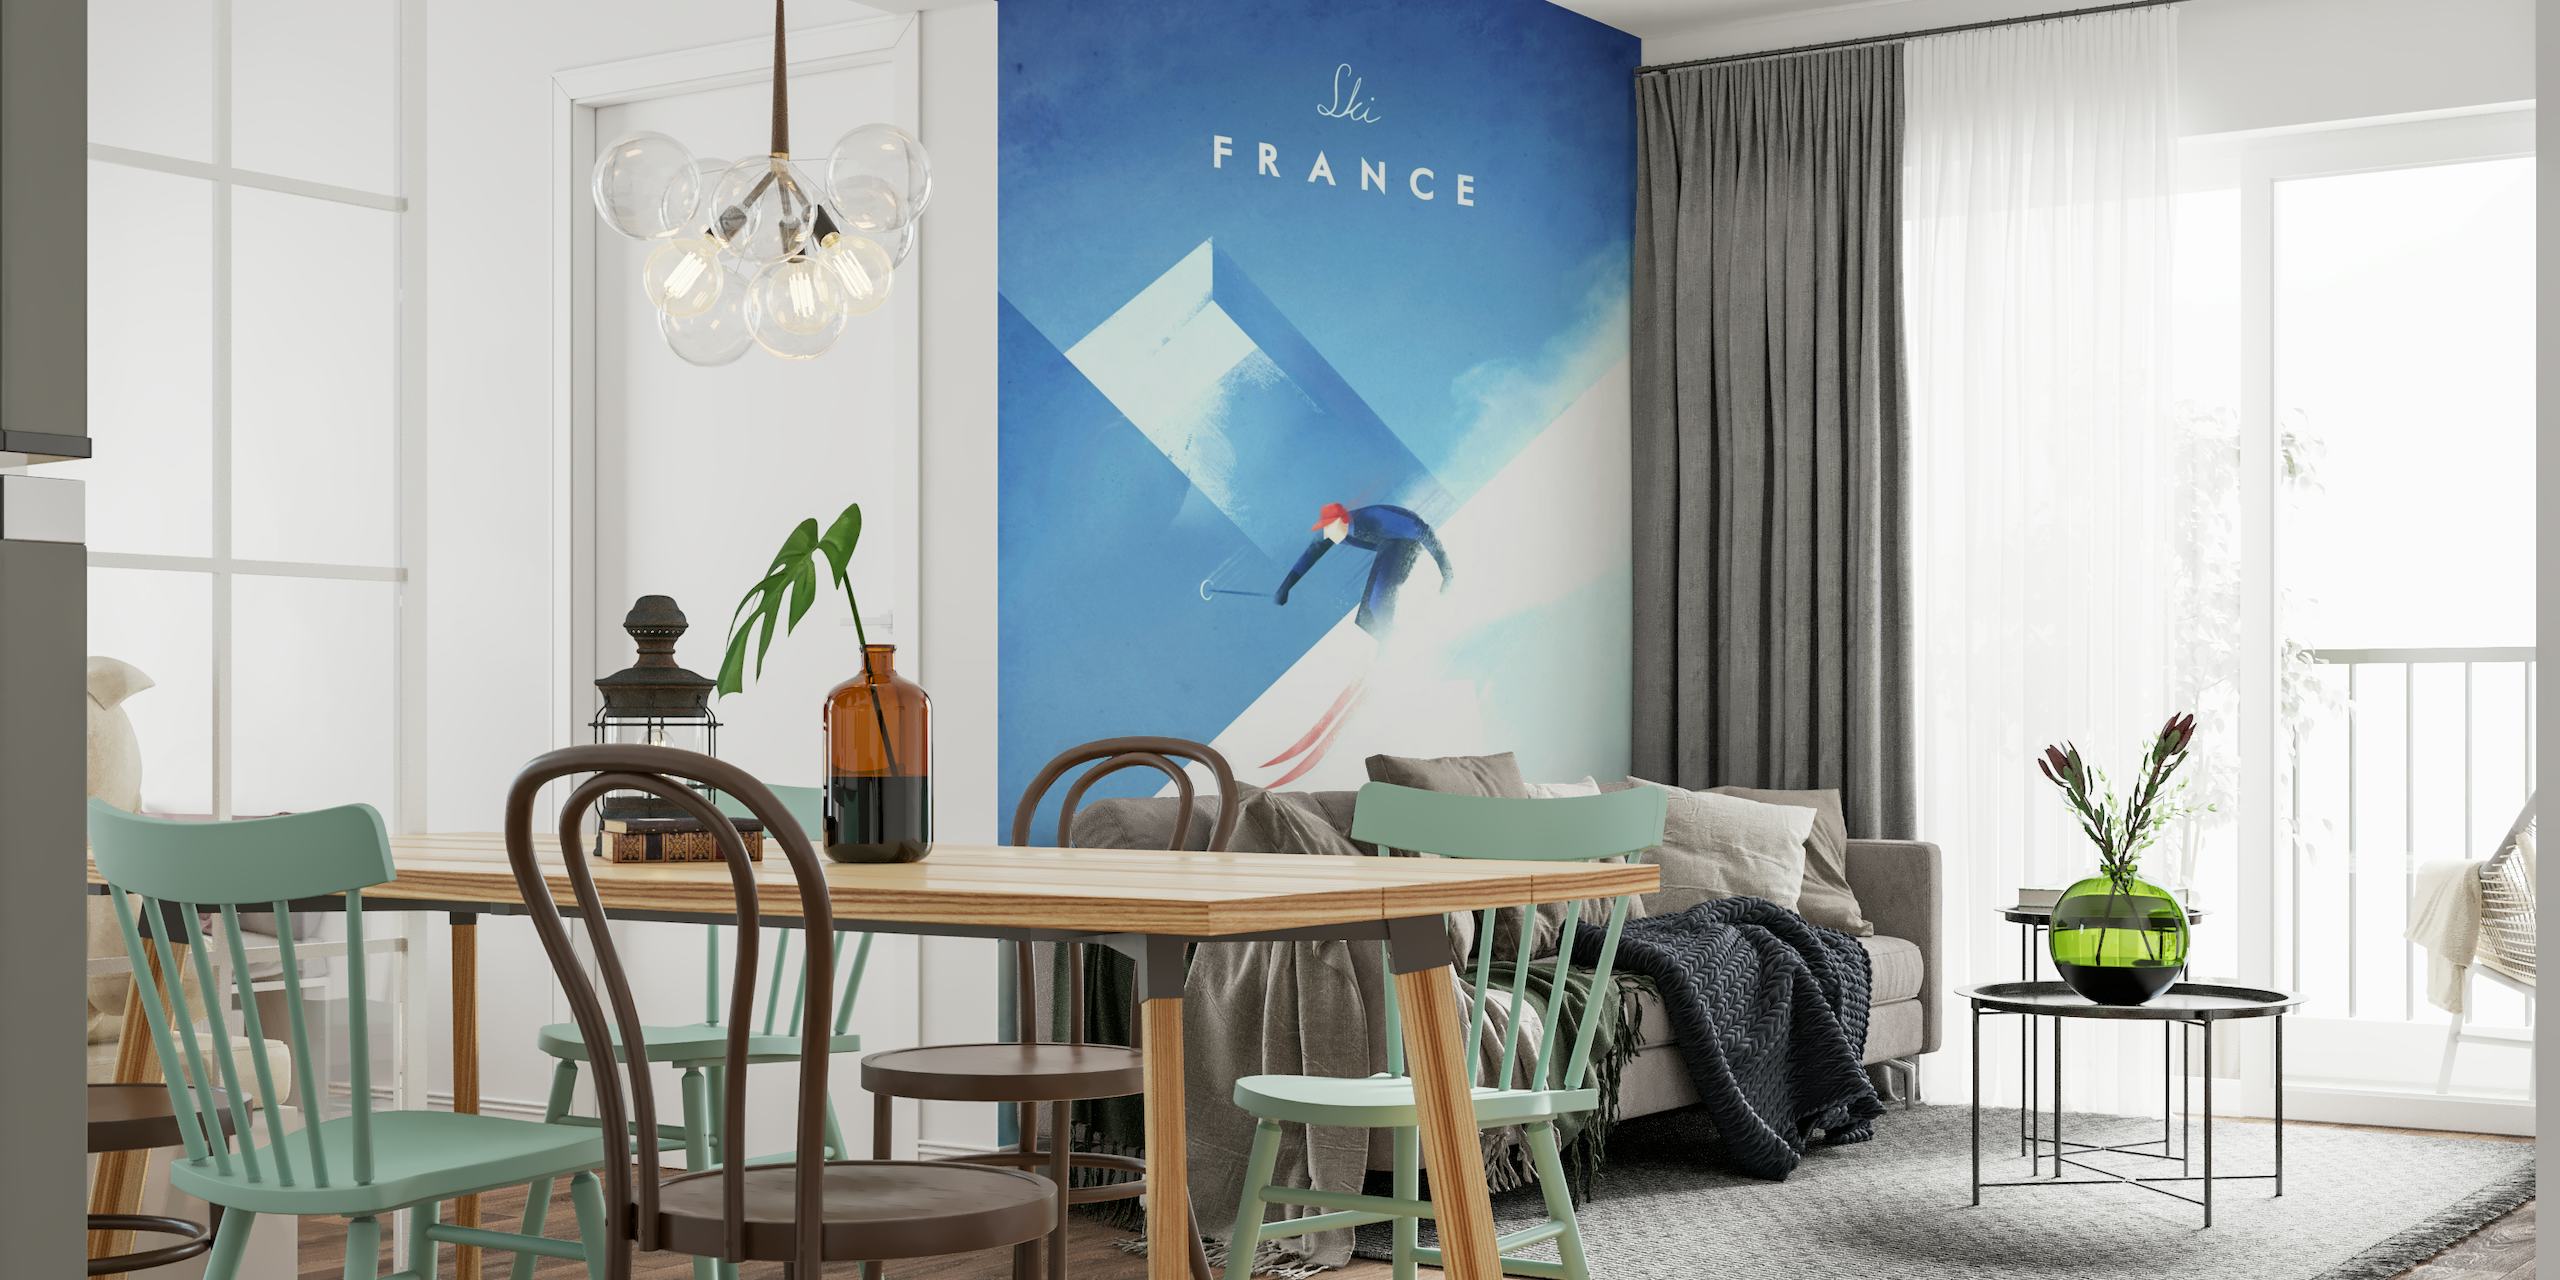 Ski France Travel Poster tapety